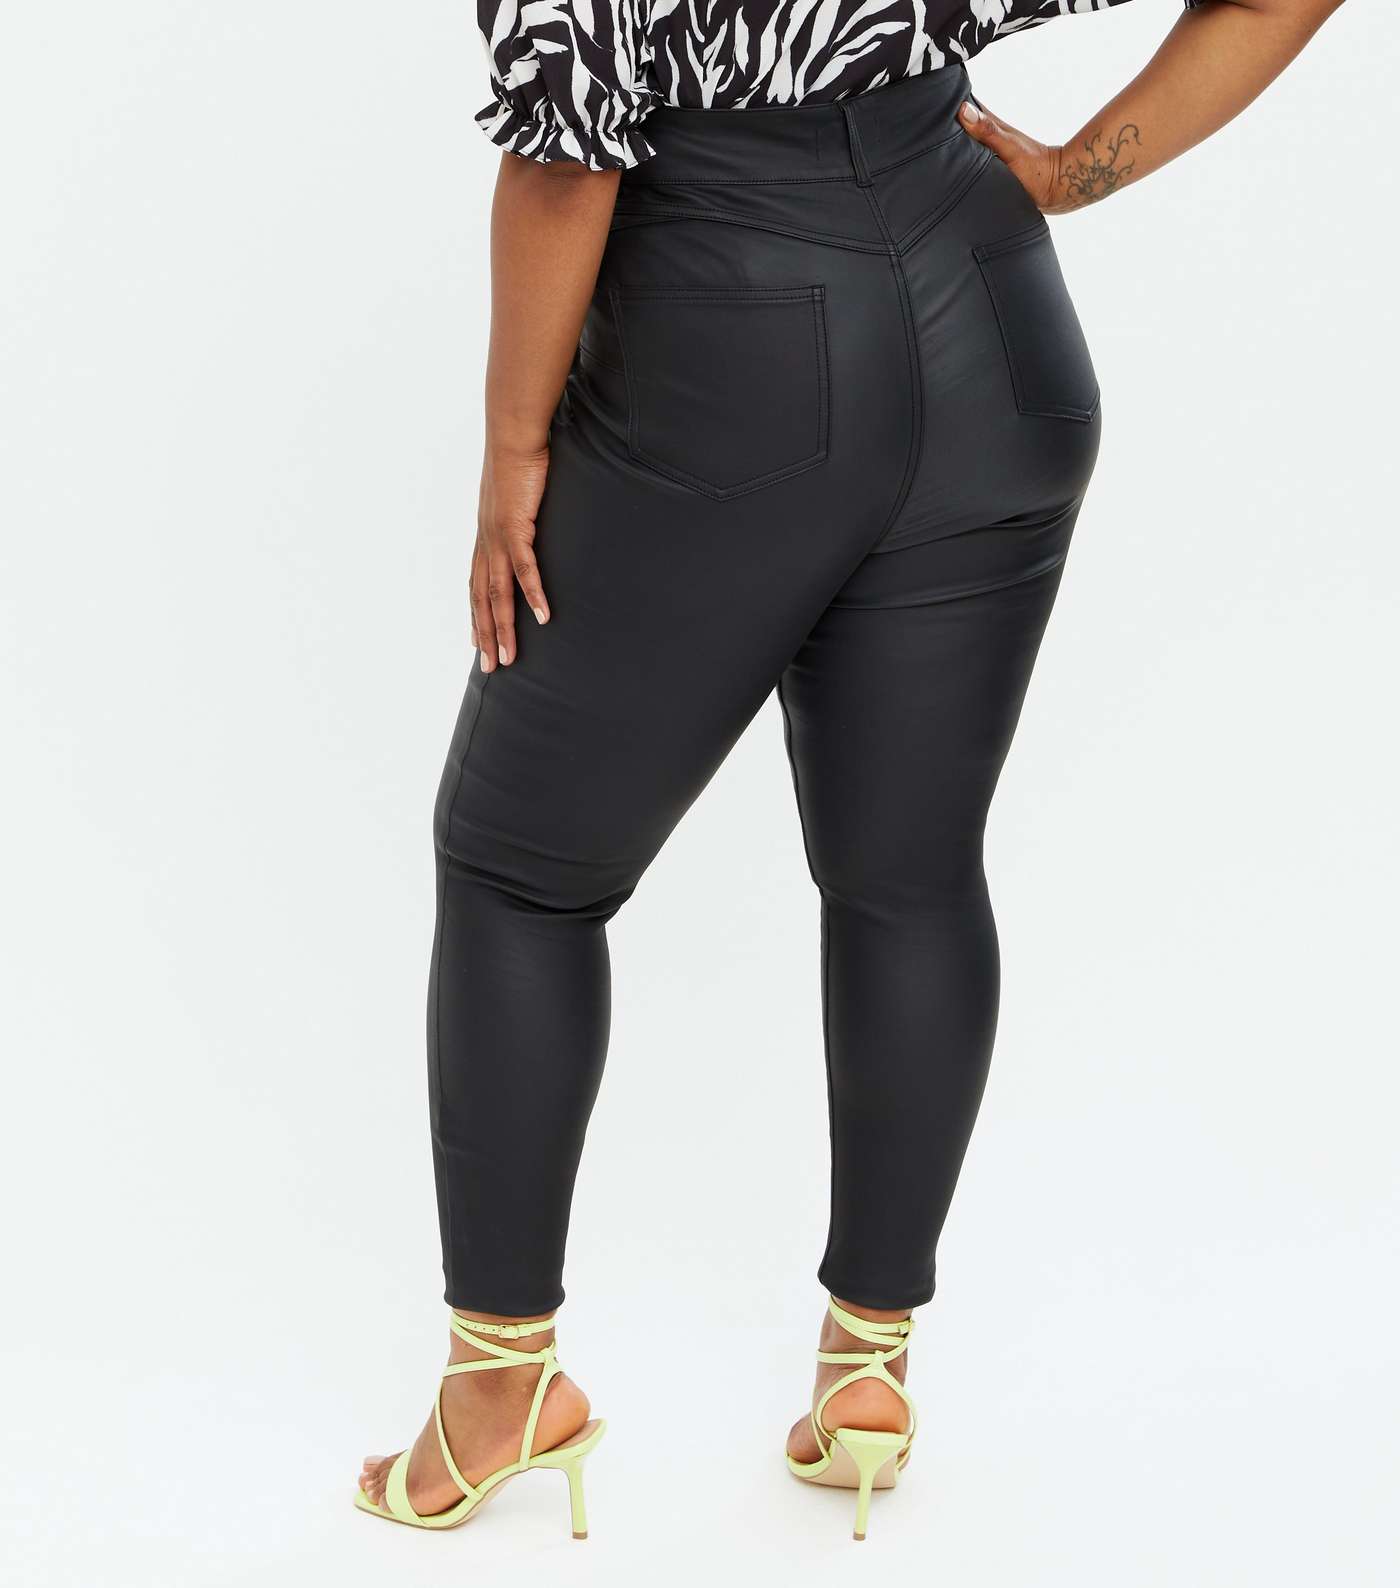 Curves Black Leather-Look Lift & Shape Jenna Skinny Jeans Image 4